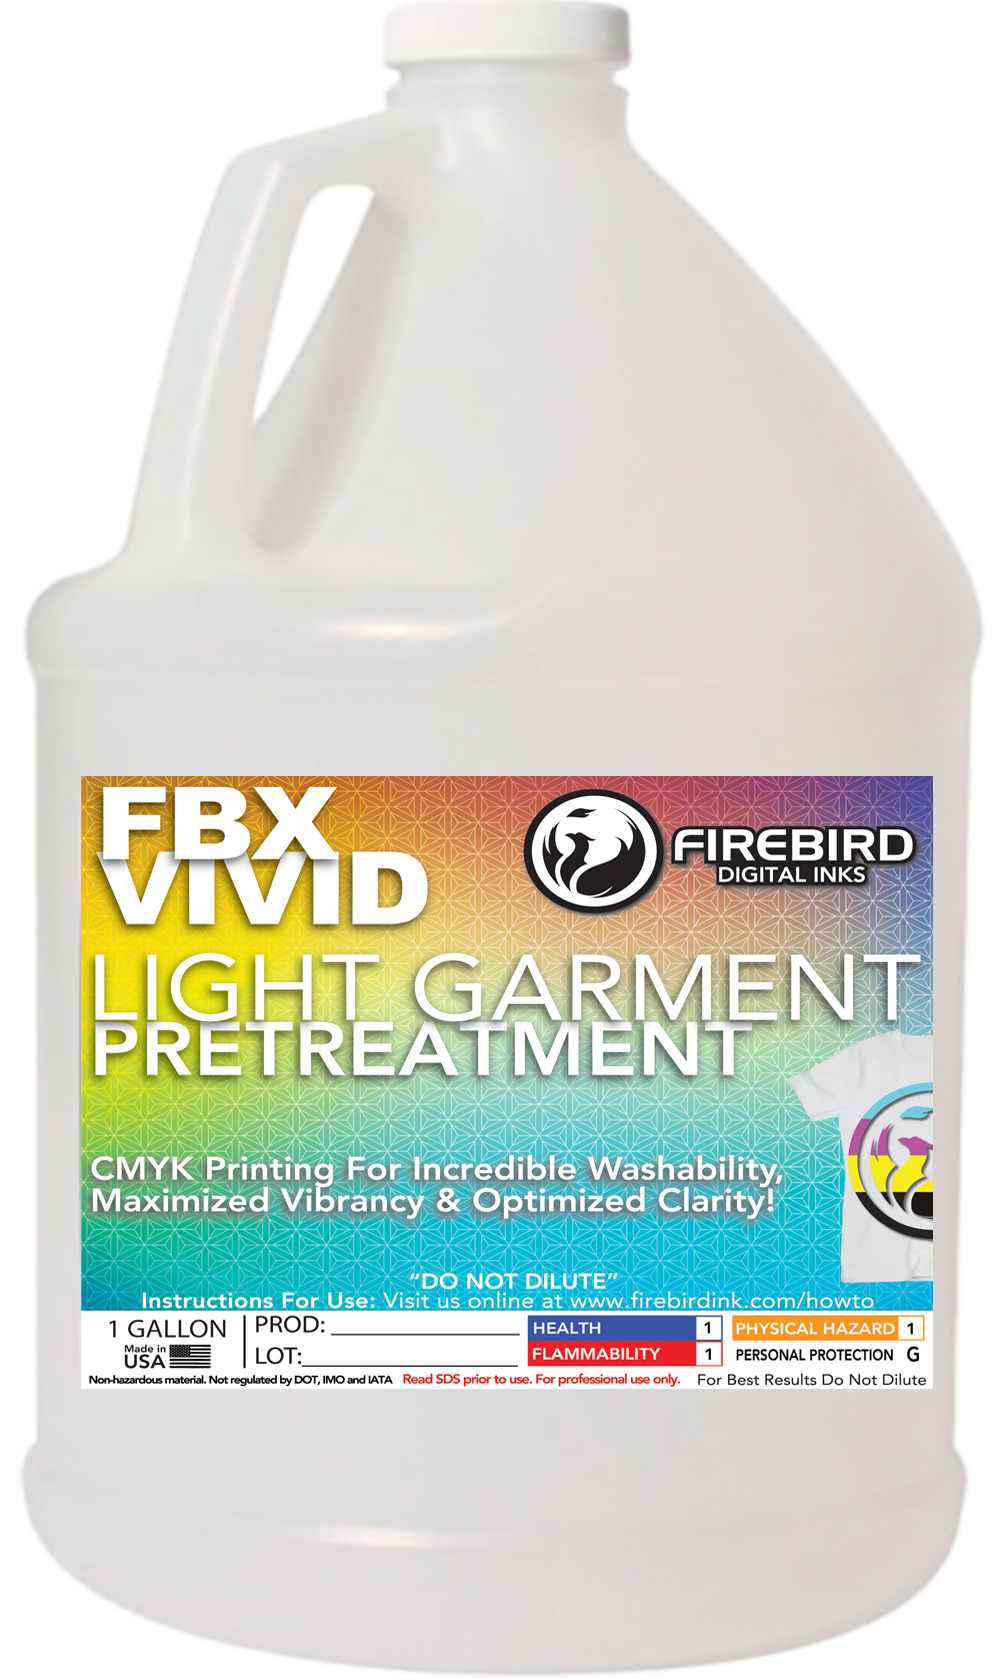 FBX-VIVID Light Garment DTG Pretreatment